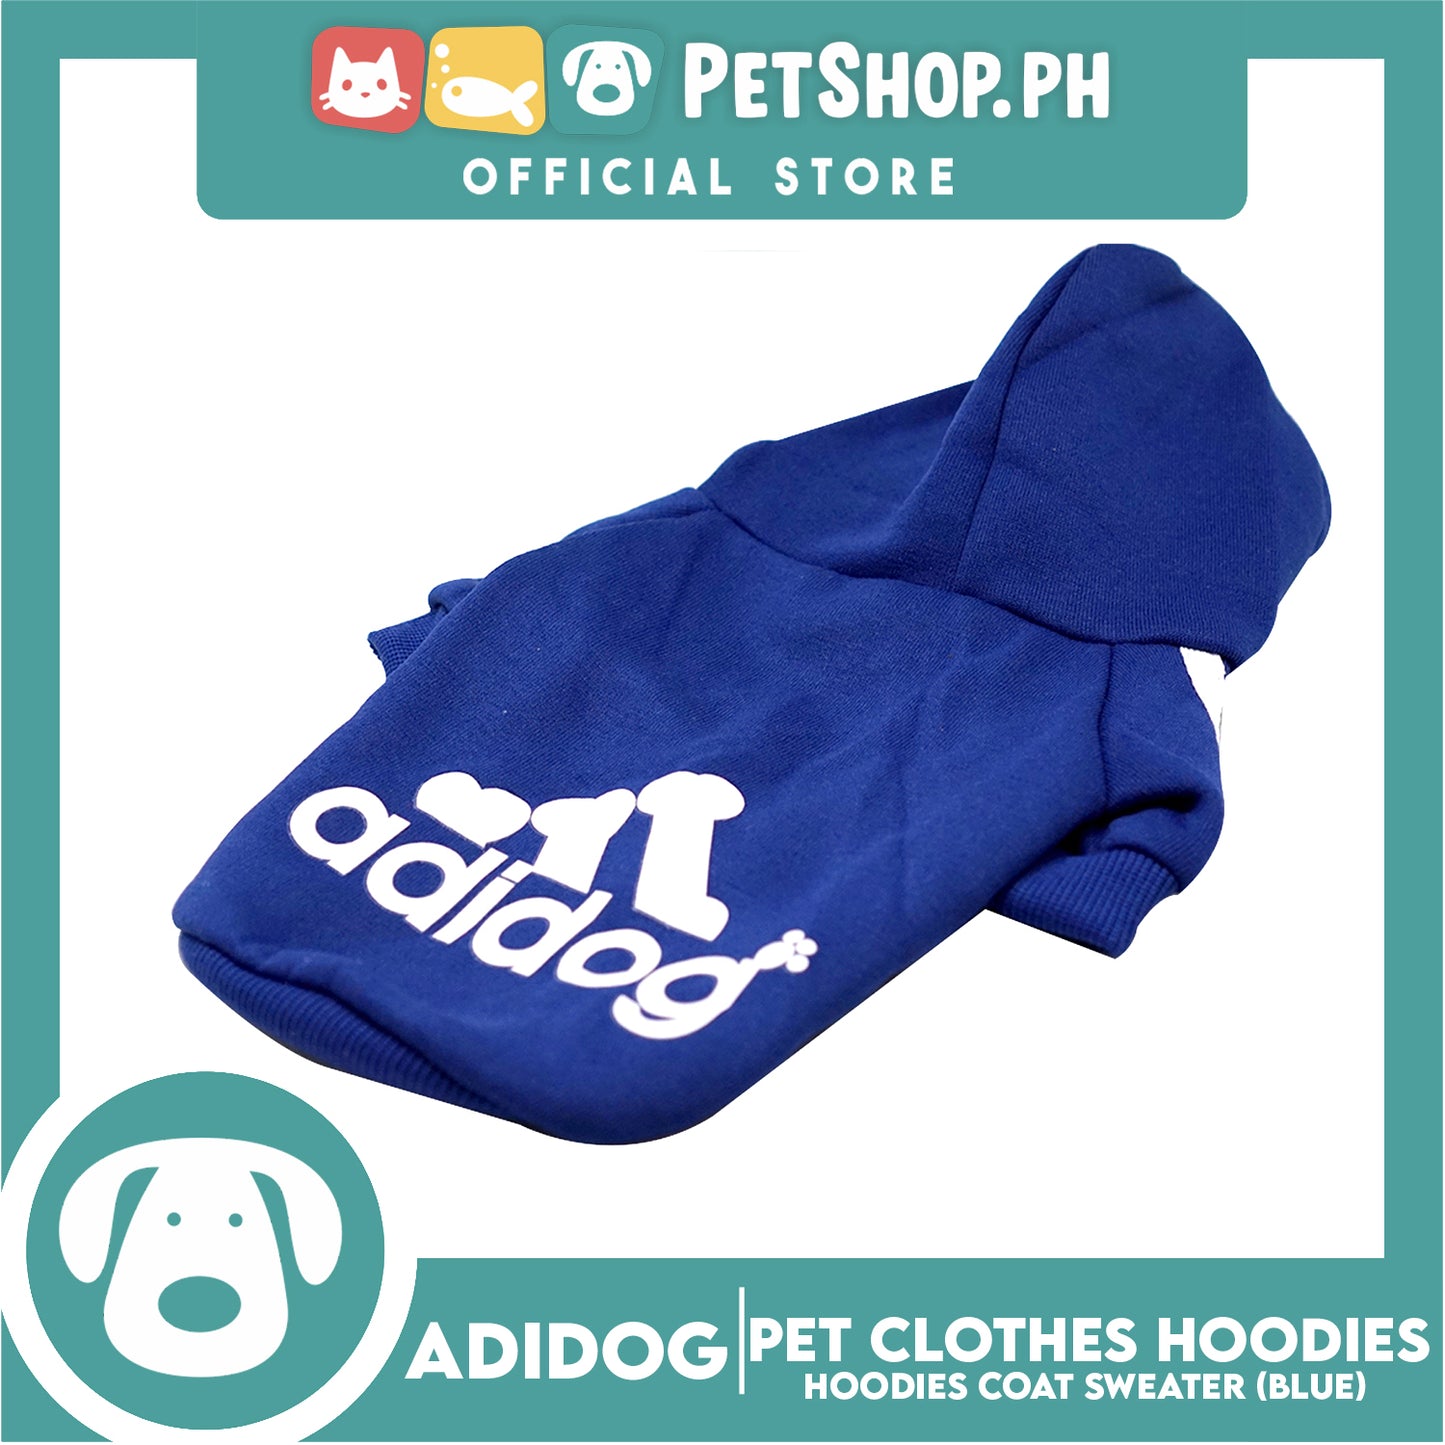 Adidog Pet Clothes Hoodies, Dog Winter Hoodies Apparel Puppy Cute Warm Hoodies Coat Sweater (Blue)  Large